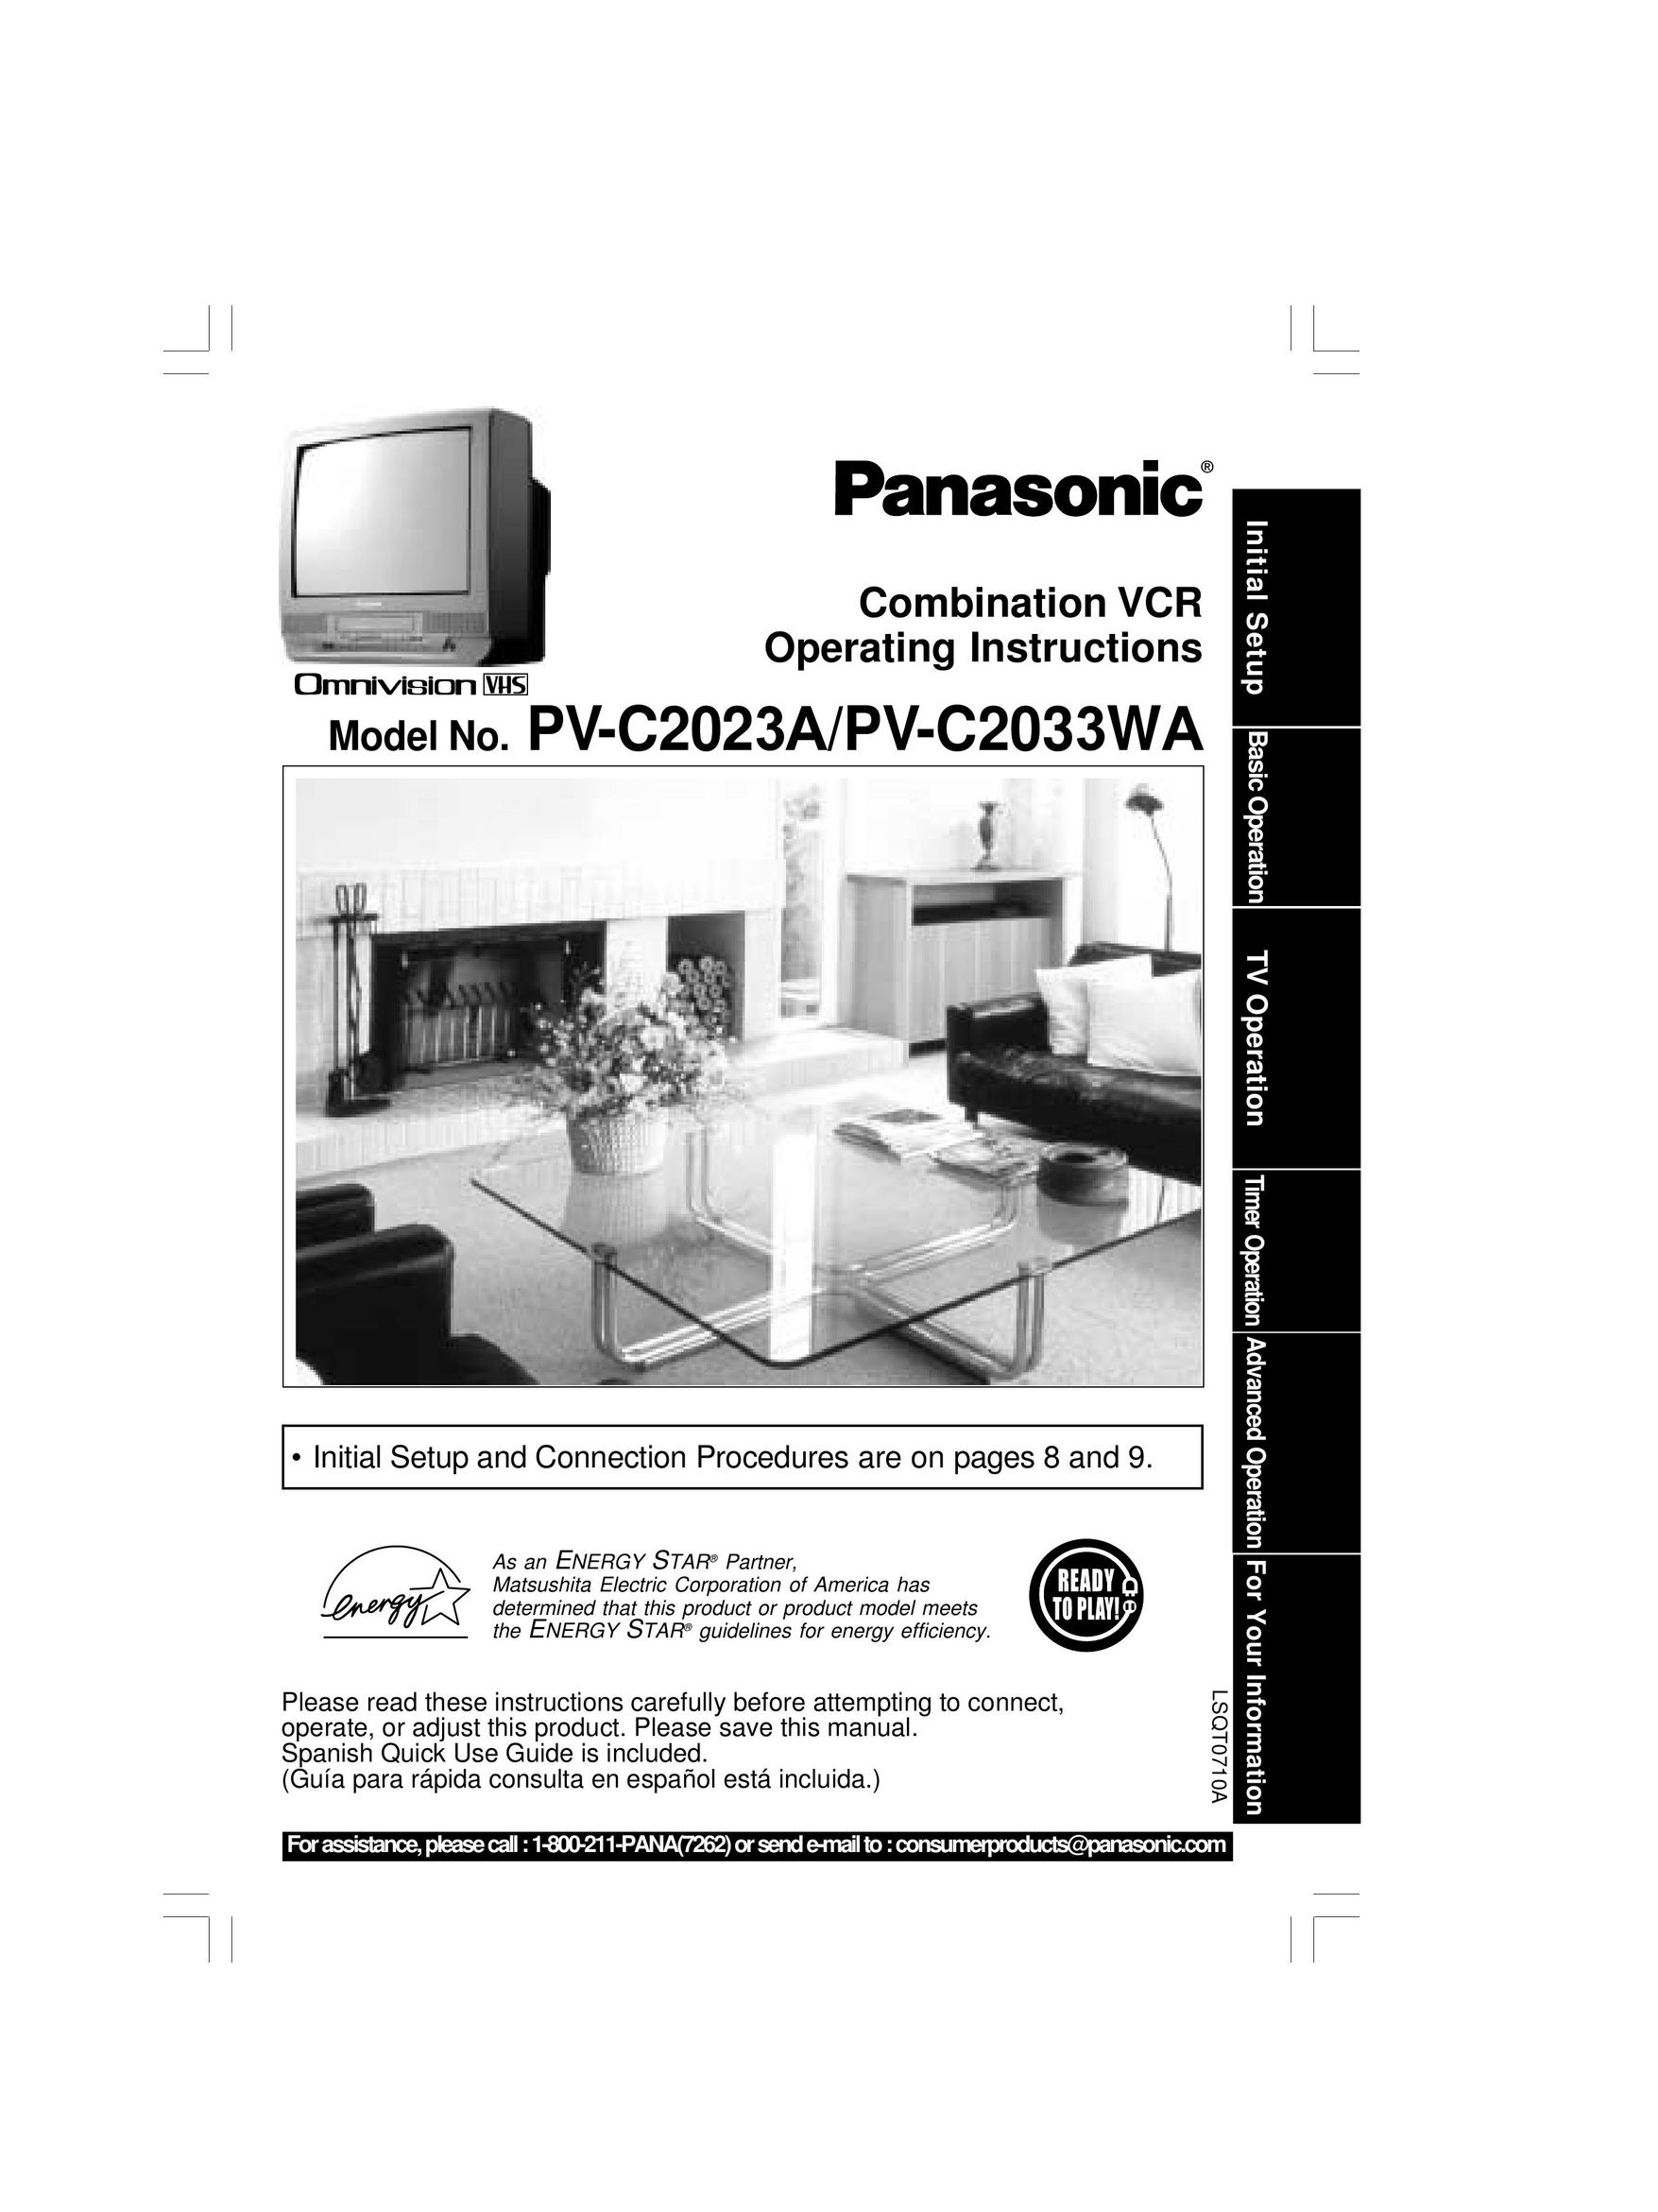 Panasonic PV-C2033WA TV VCR Combo User Manual